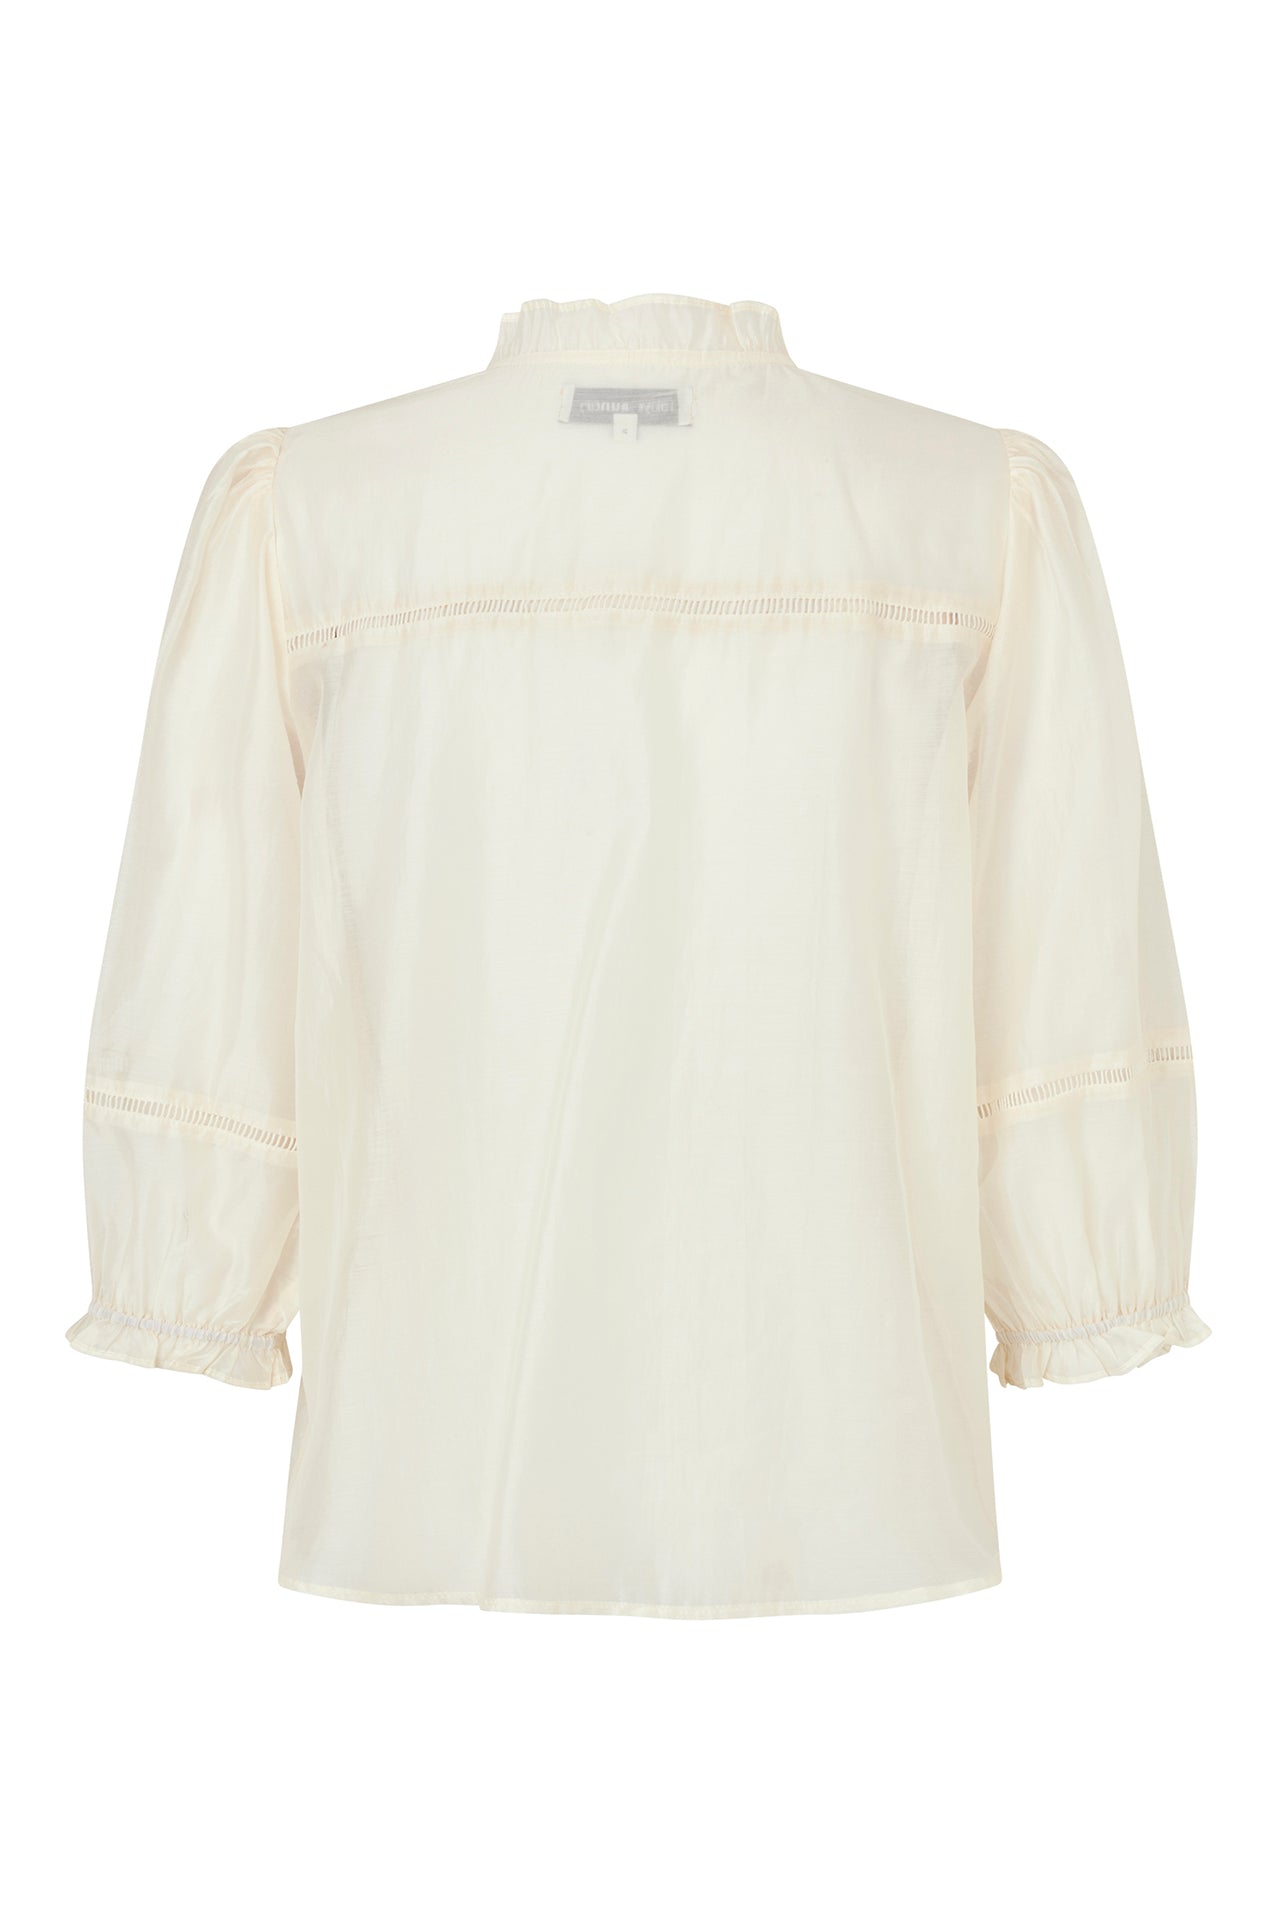 Lollys Laundry VidaLL Shirt 3/4 Shirt 01 White